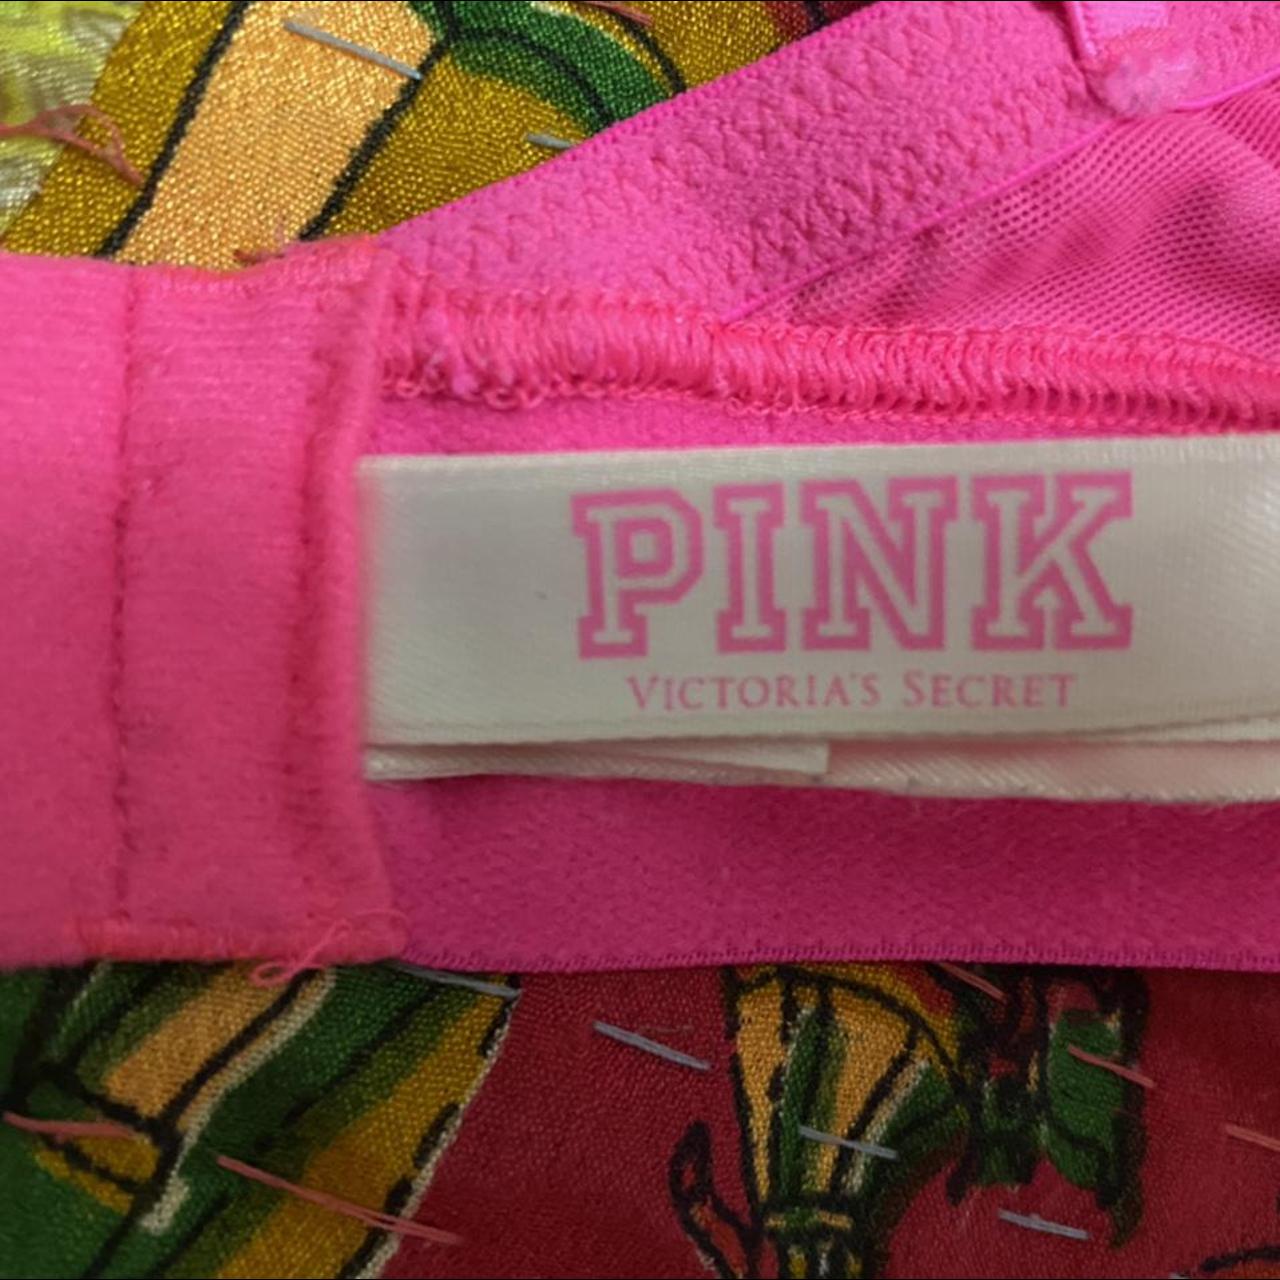 Victorias Secret 34DDD bra. This is a hot pink color - Depop